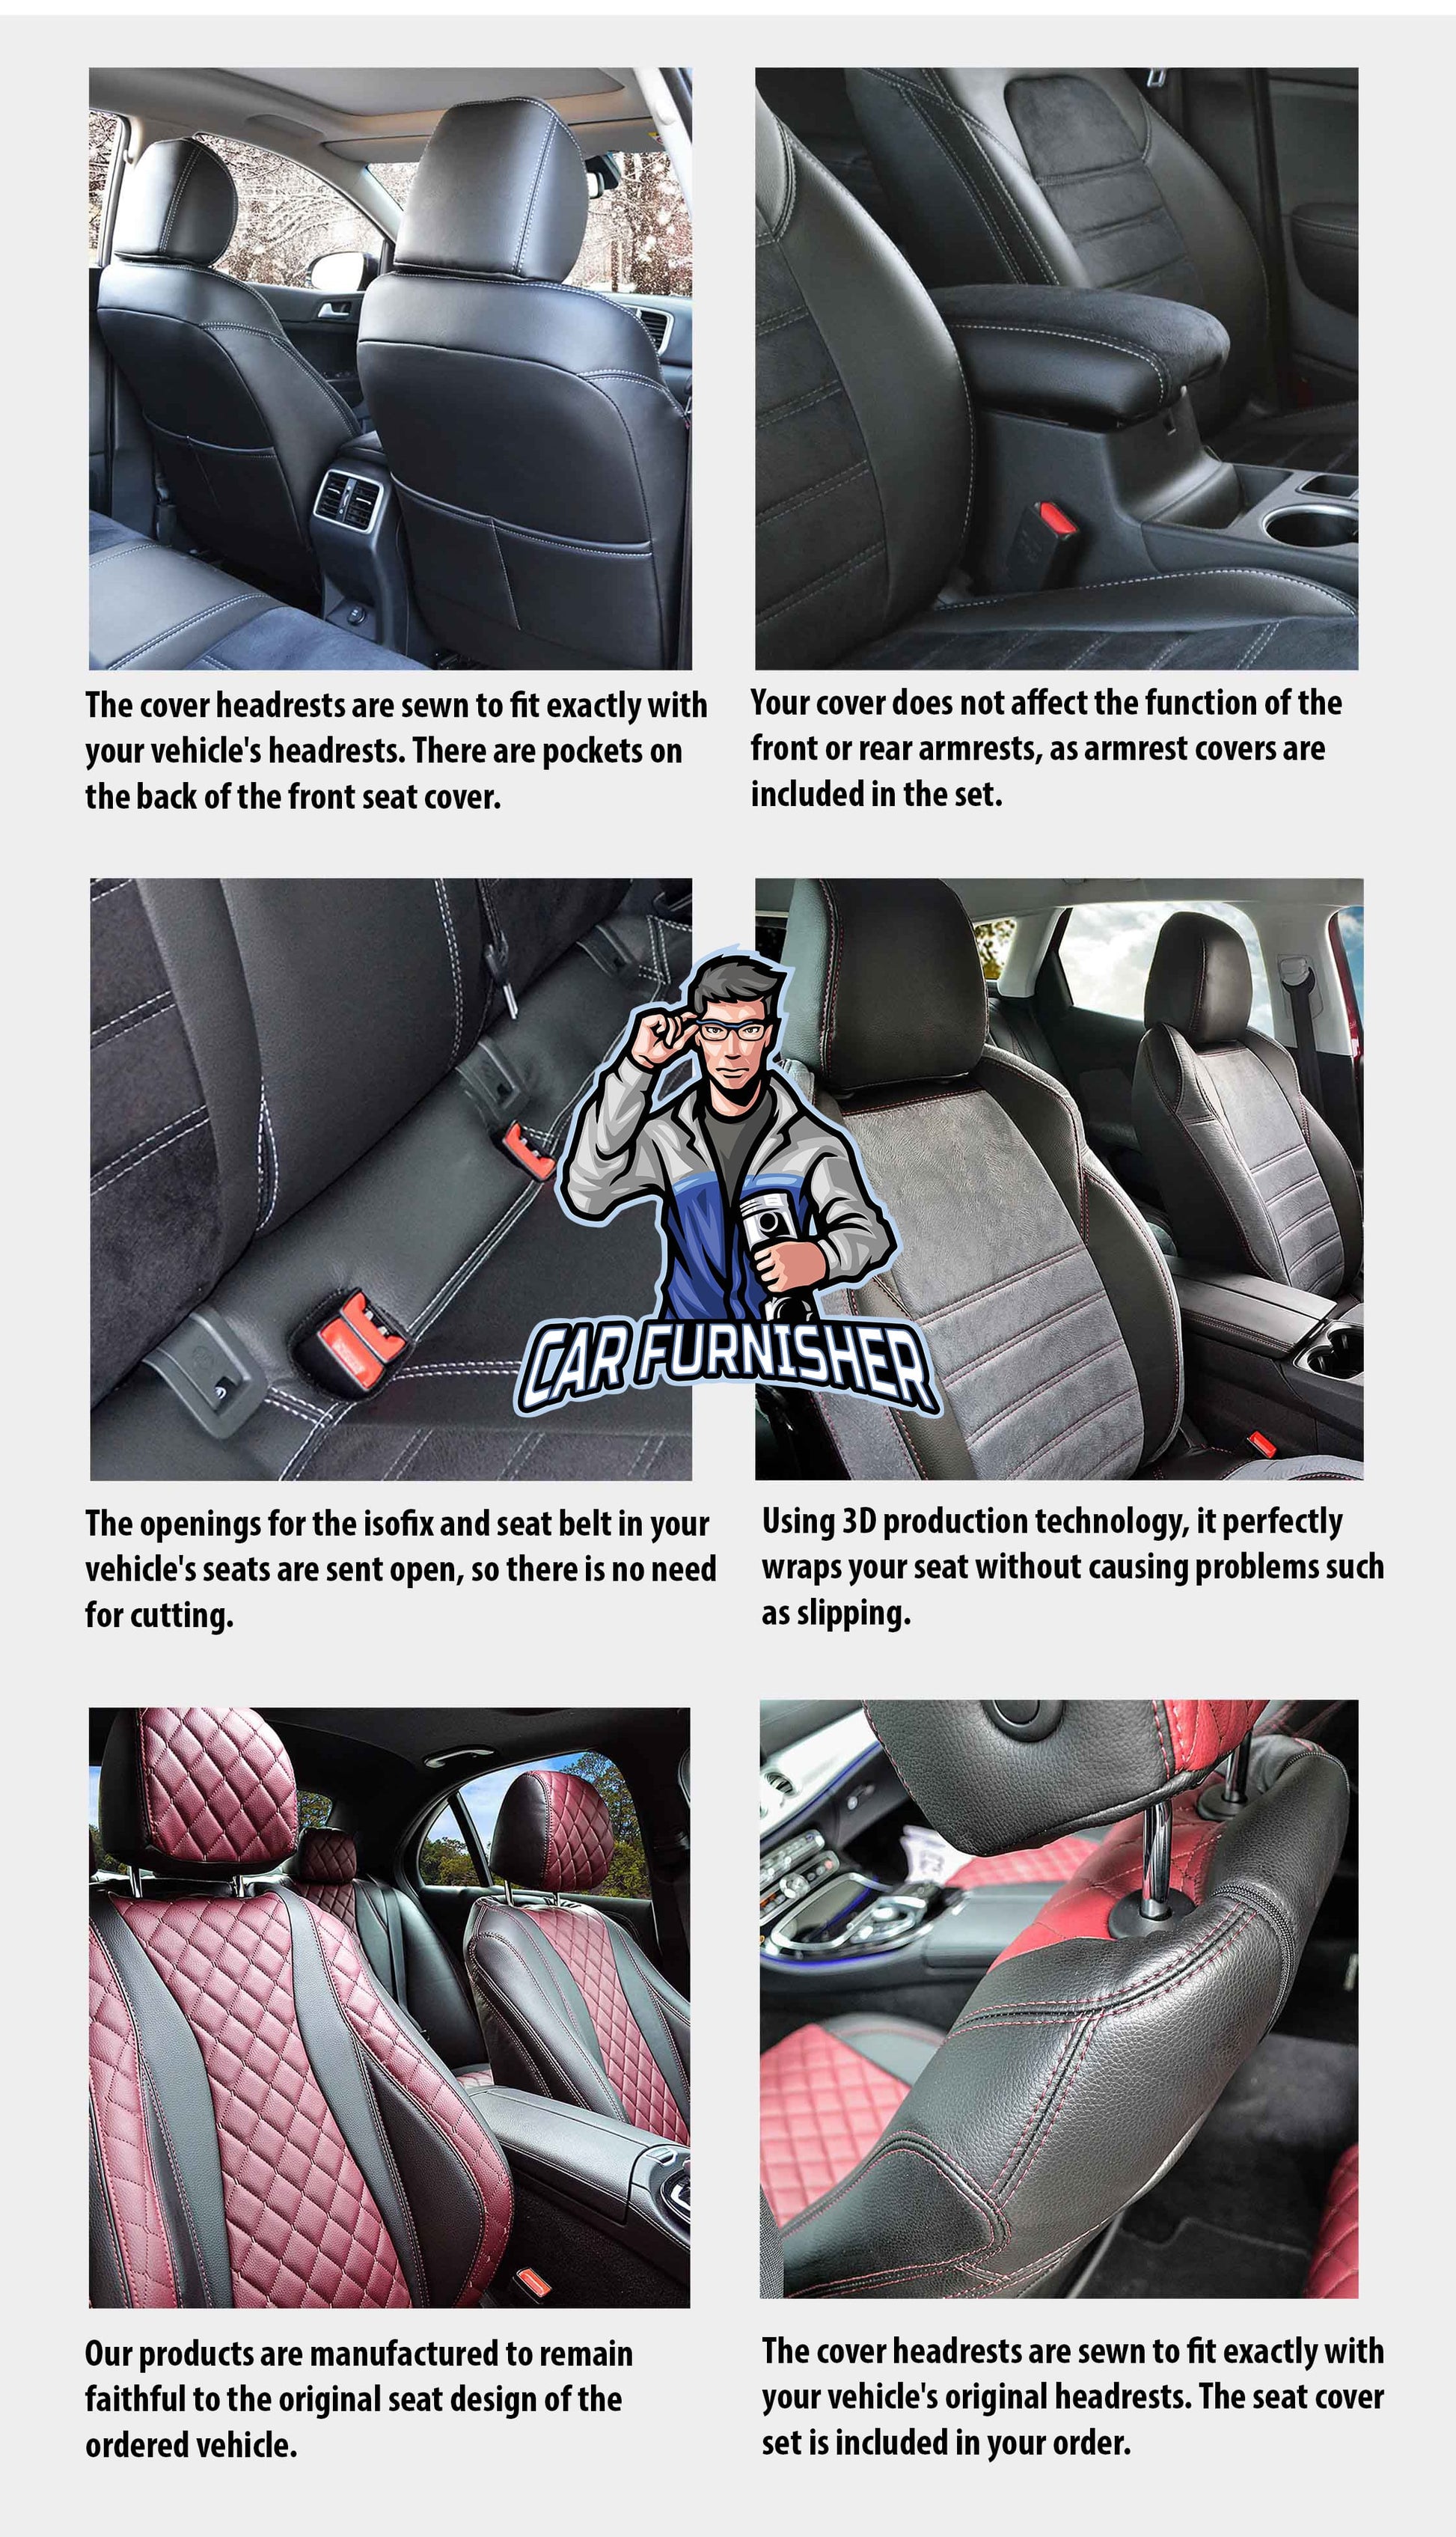 Kia Sorento Seat Covers Madrid Leather Design Blue Leather